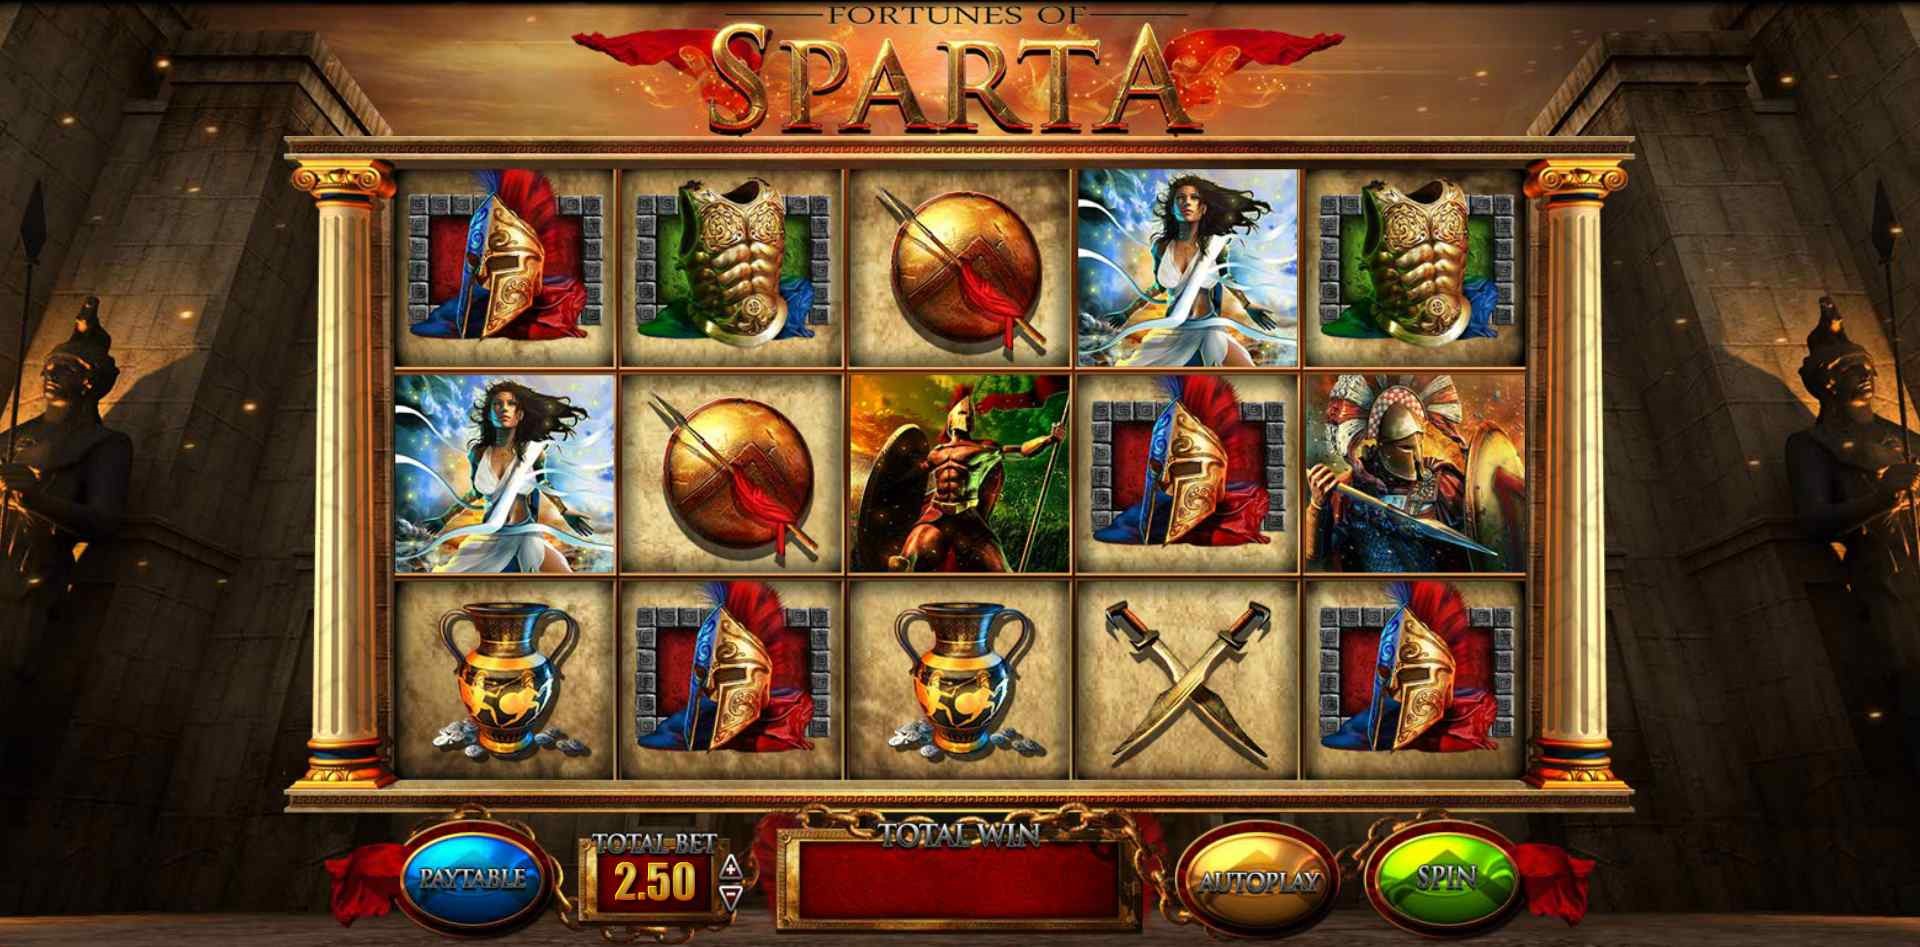 Spartan Streak feature in Blueprint’s Fortunes of Sparta online slot